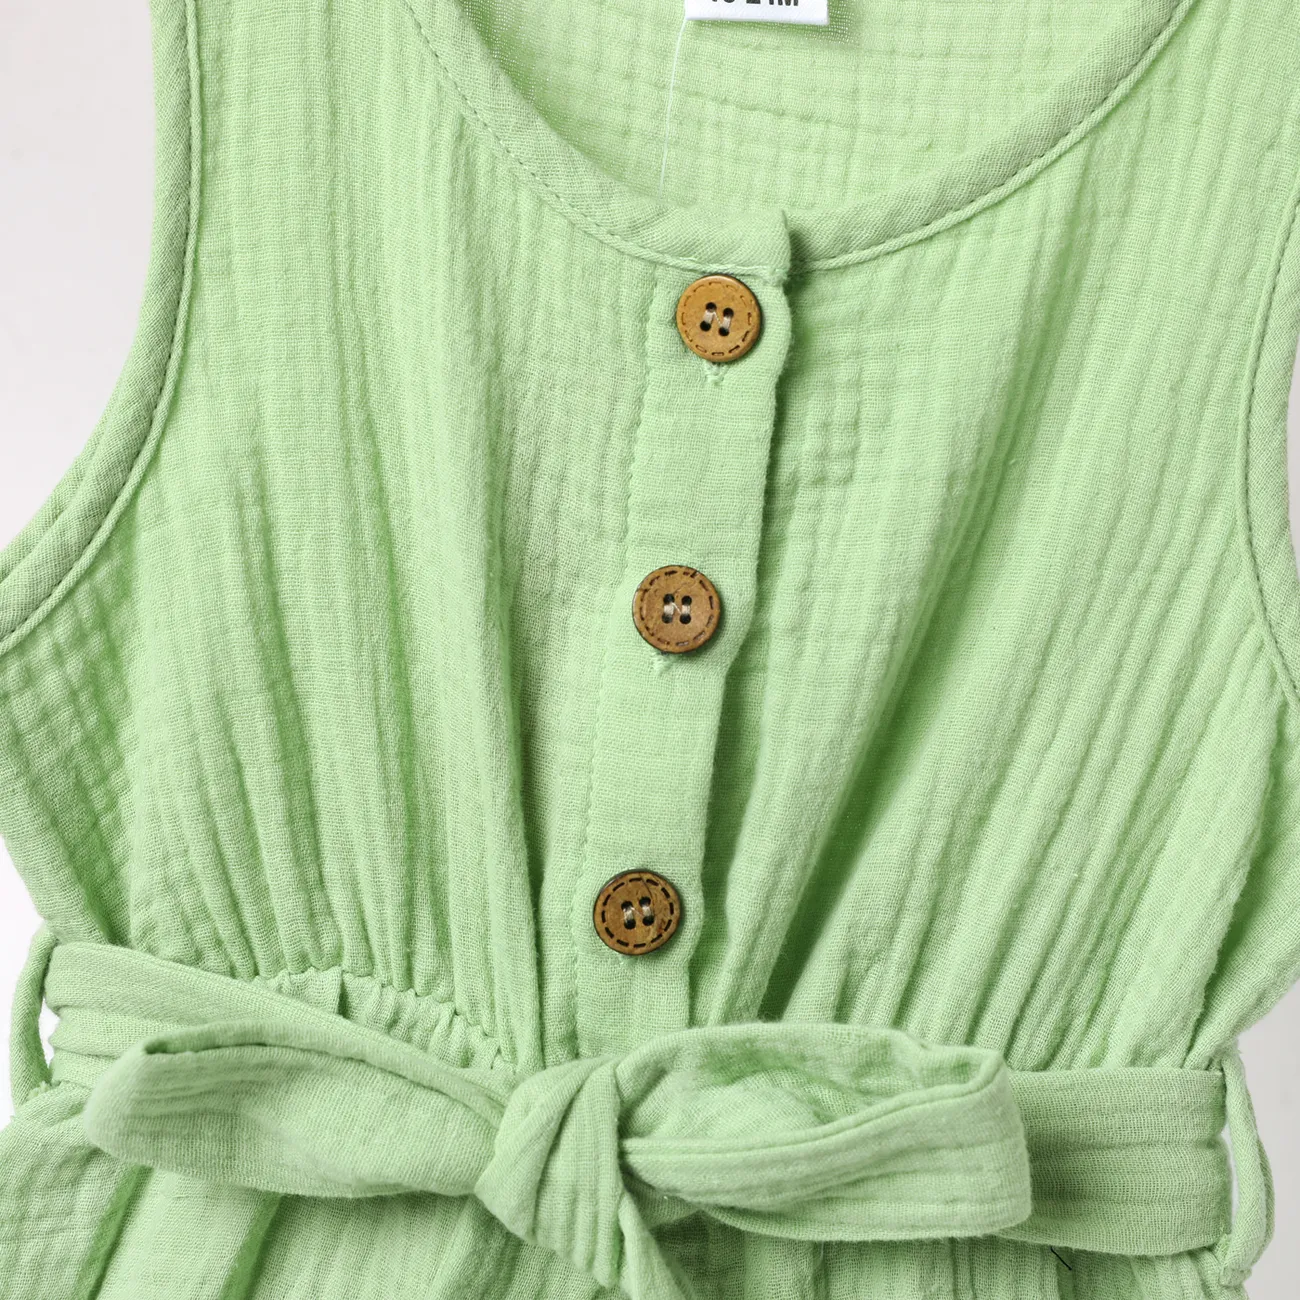 Toddler Girl 100% Cotton Solid Color Button Design Sleeveless Belted Romper Jumpsuit Shorts Light Green big image 1